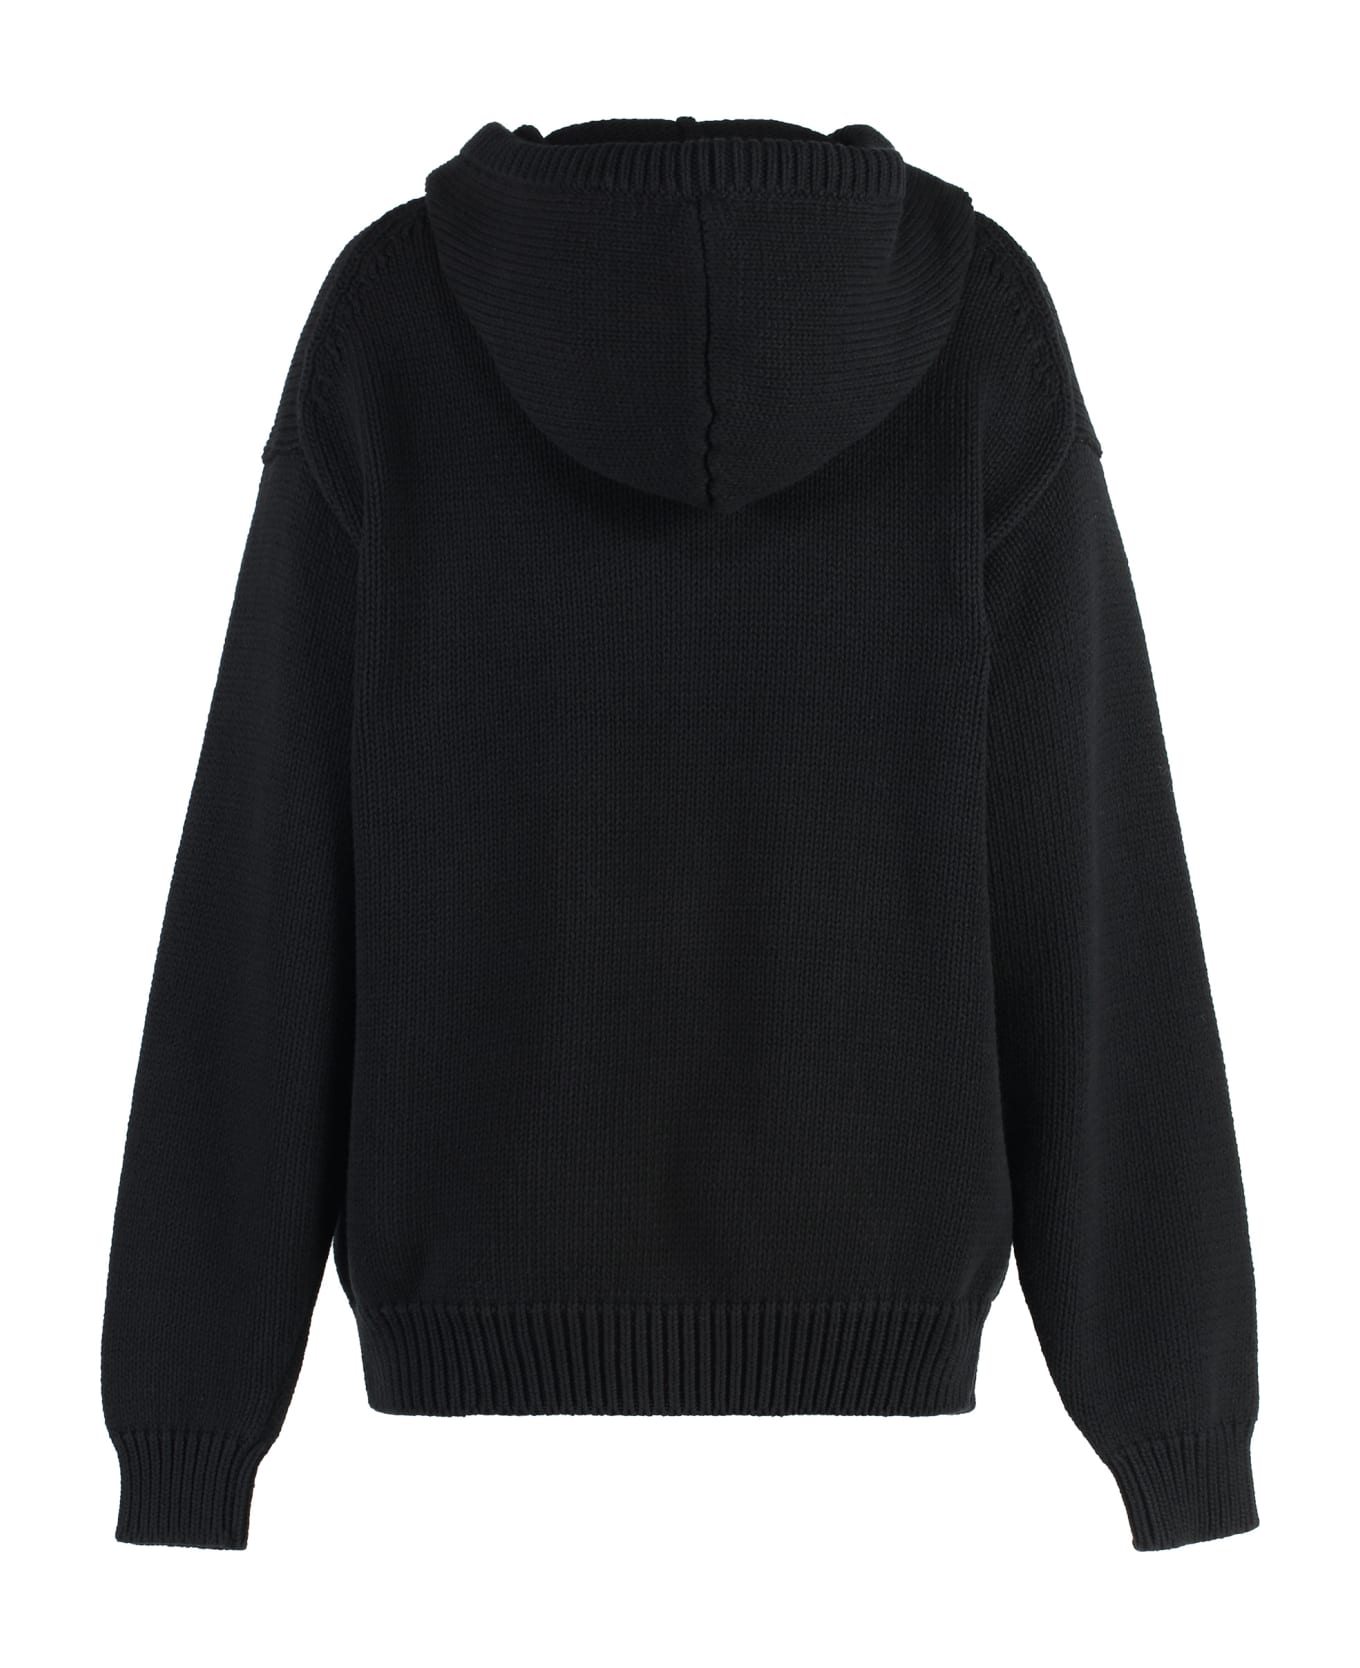 Kenzo Hooded Sweater - black